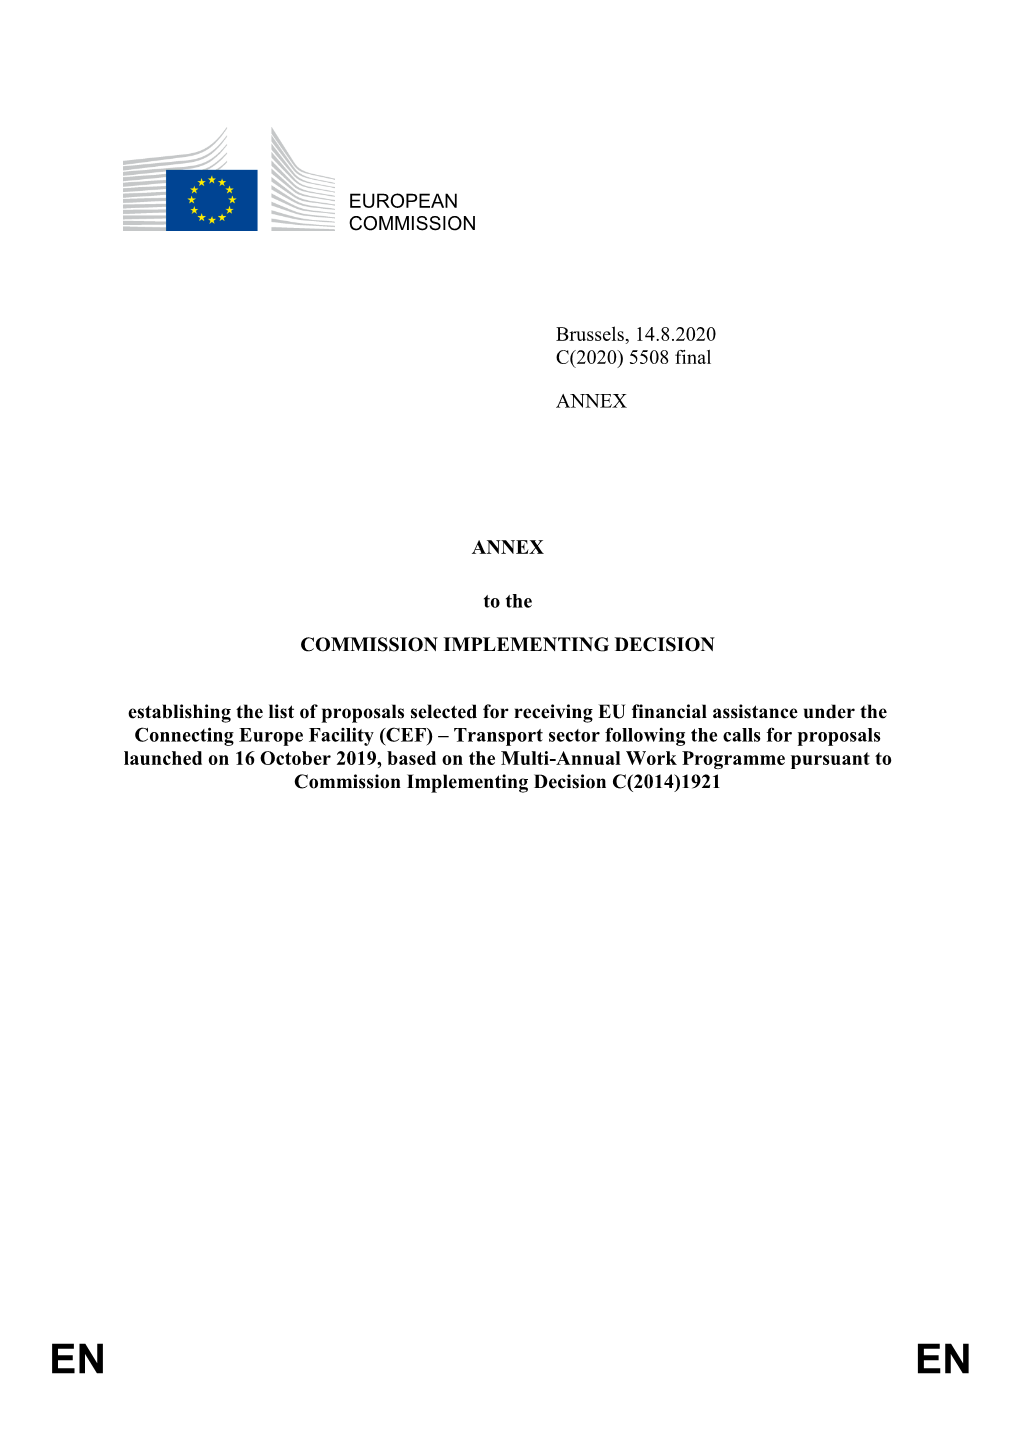 EUROPEAN COMMISSION Brussels, 14.8.2020 C(2020) 5508 Final ANNEX ANNEX to the COMMISSION IMPLEMENTING DECISION Establishing